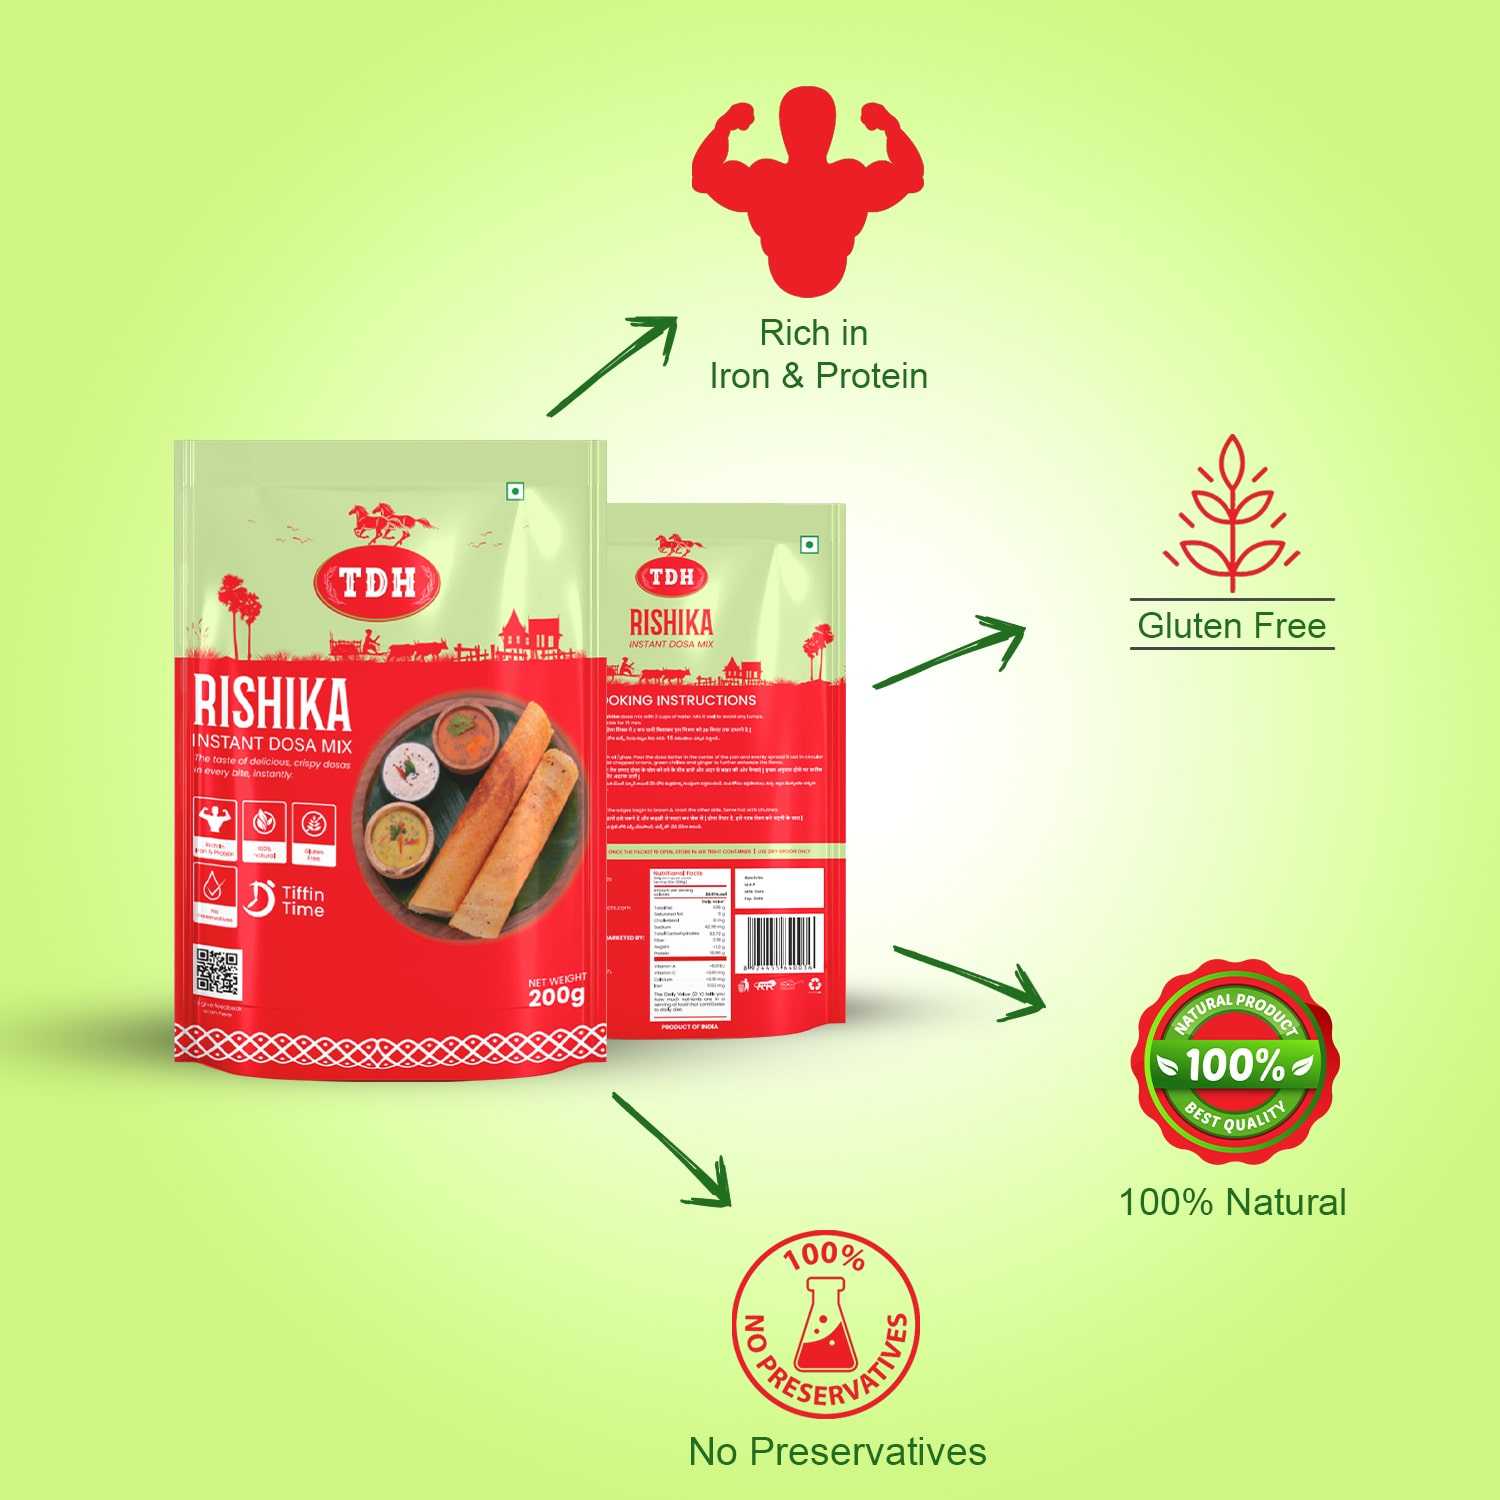 Rishika Instant Dosa Mix product image 2 tdhfoodproducts